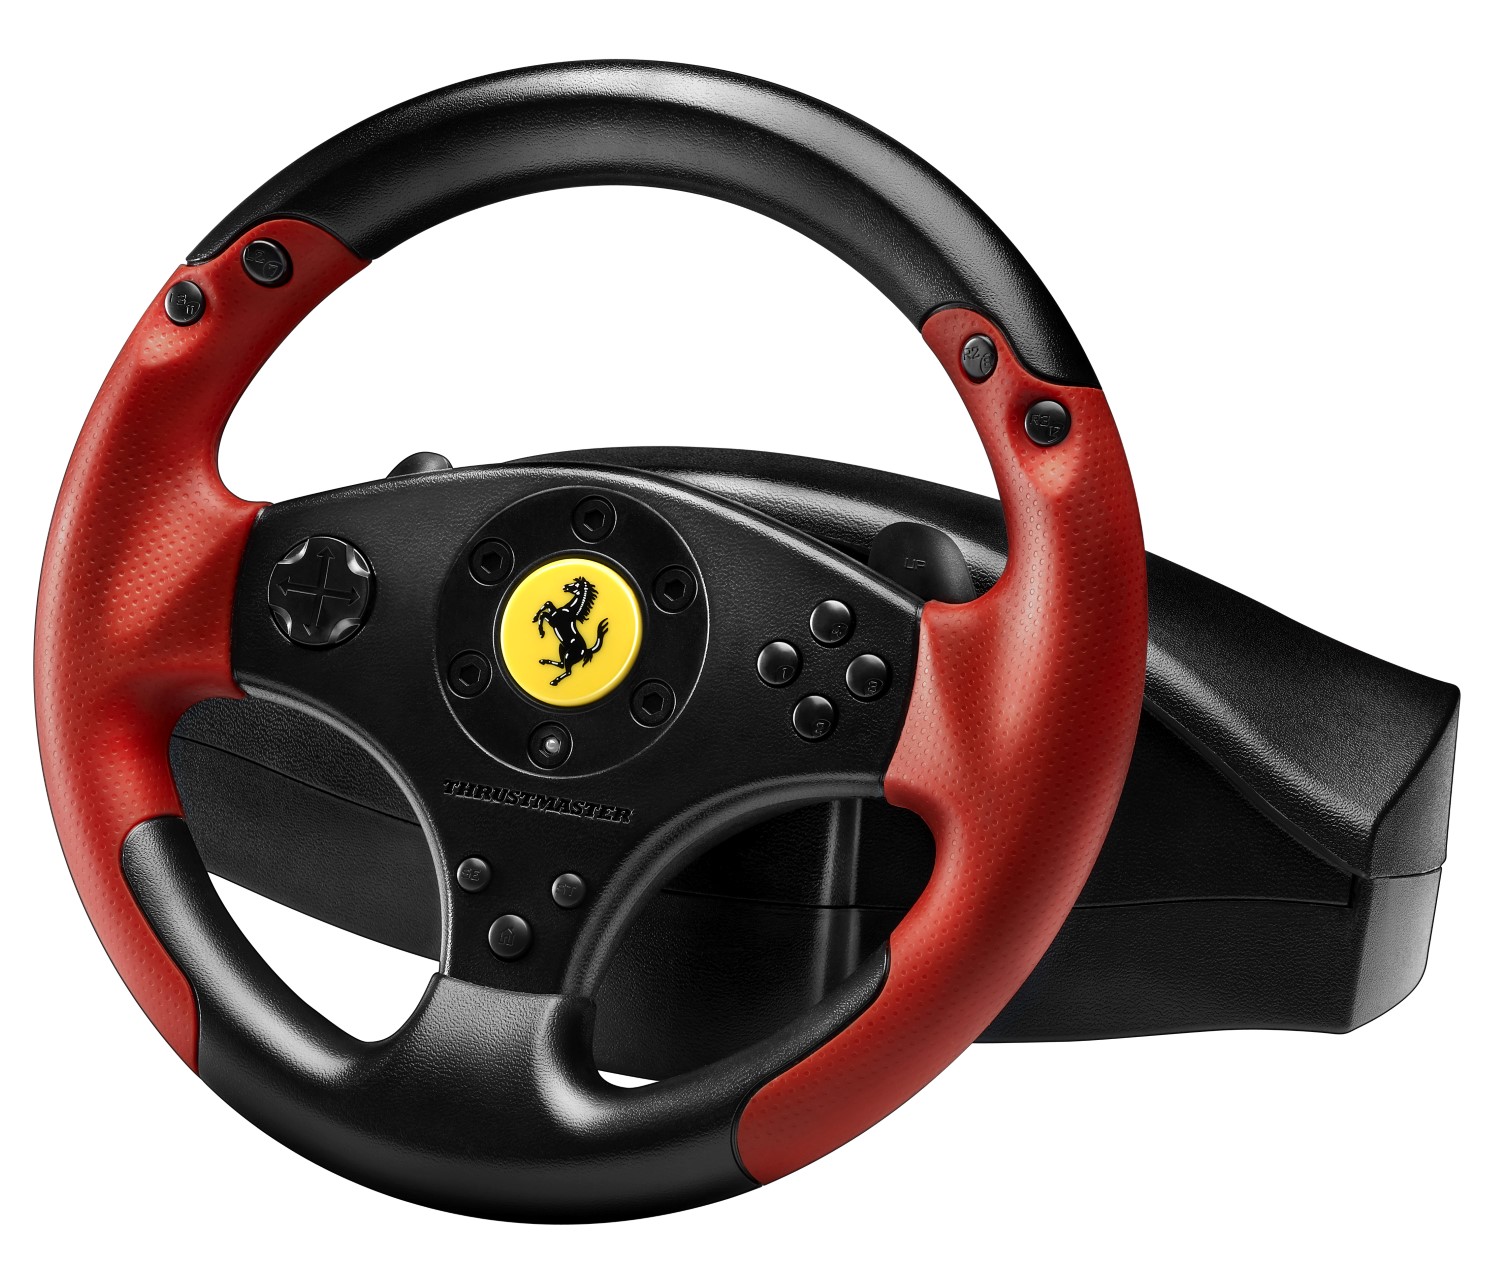 Thrustmaster Ferrari Racing Wheel Red Legend for PS3/PC